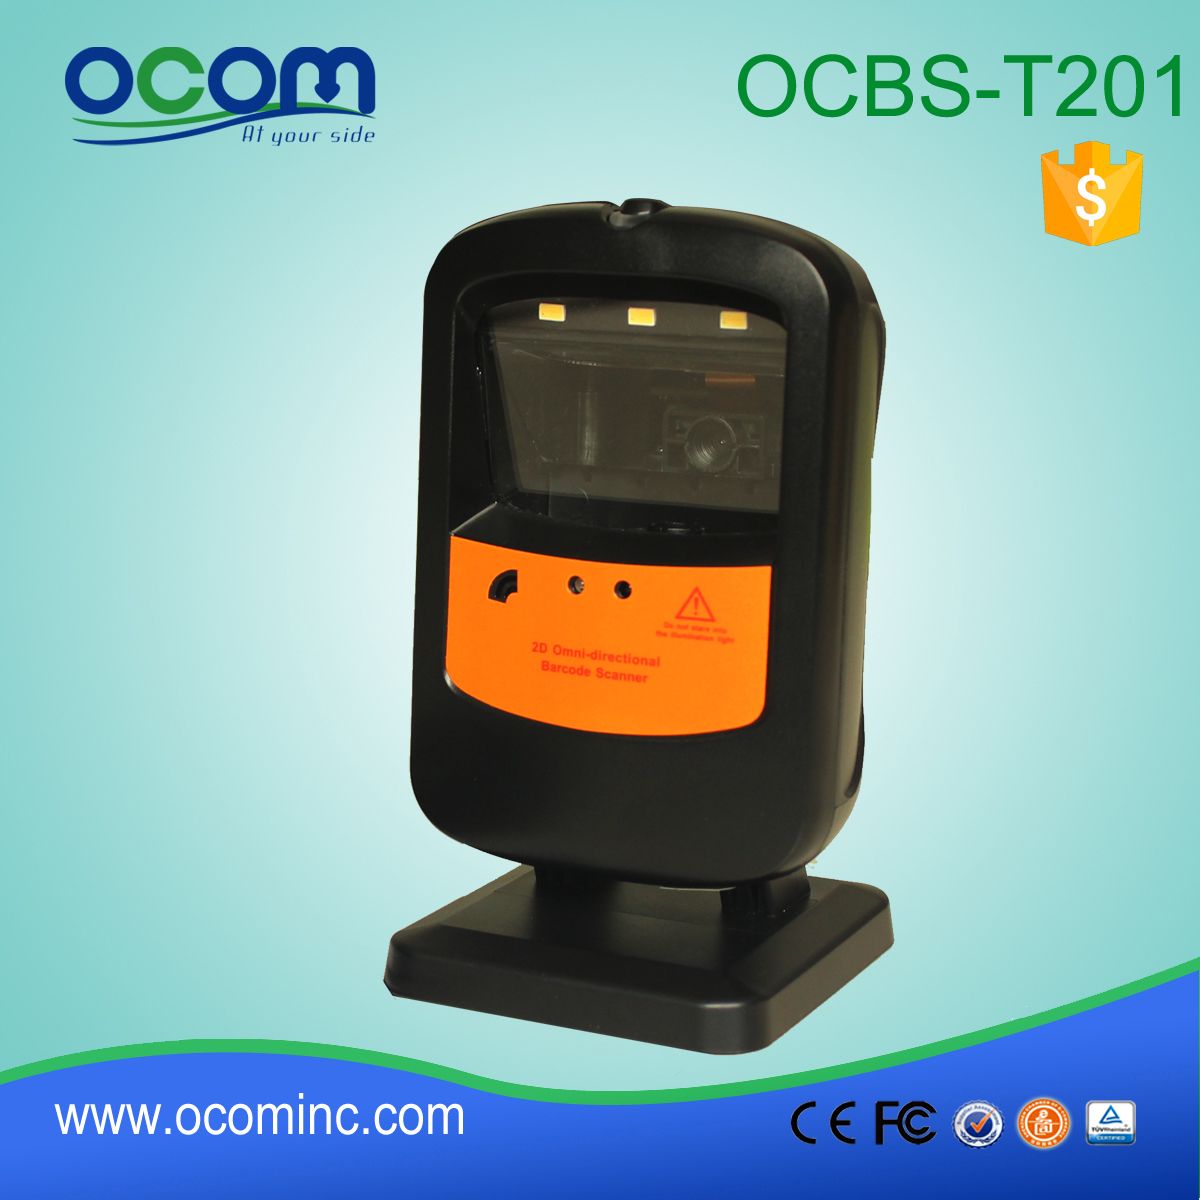 OCBS-T201: الباركود الماسح الضوئي المورد الفلبين، الباركود 2D وحدة الماسح الضوئي